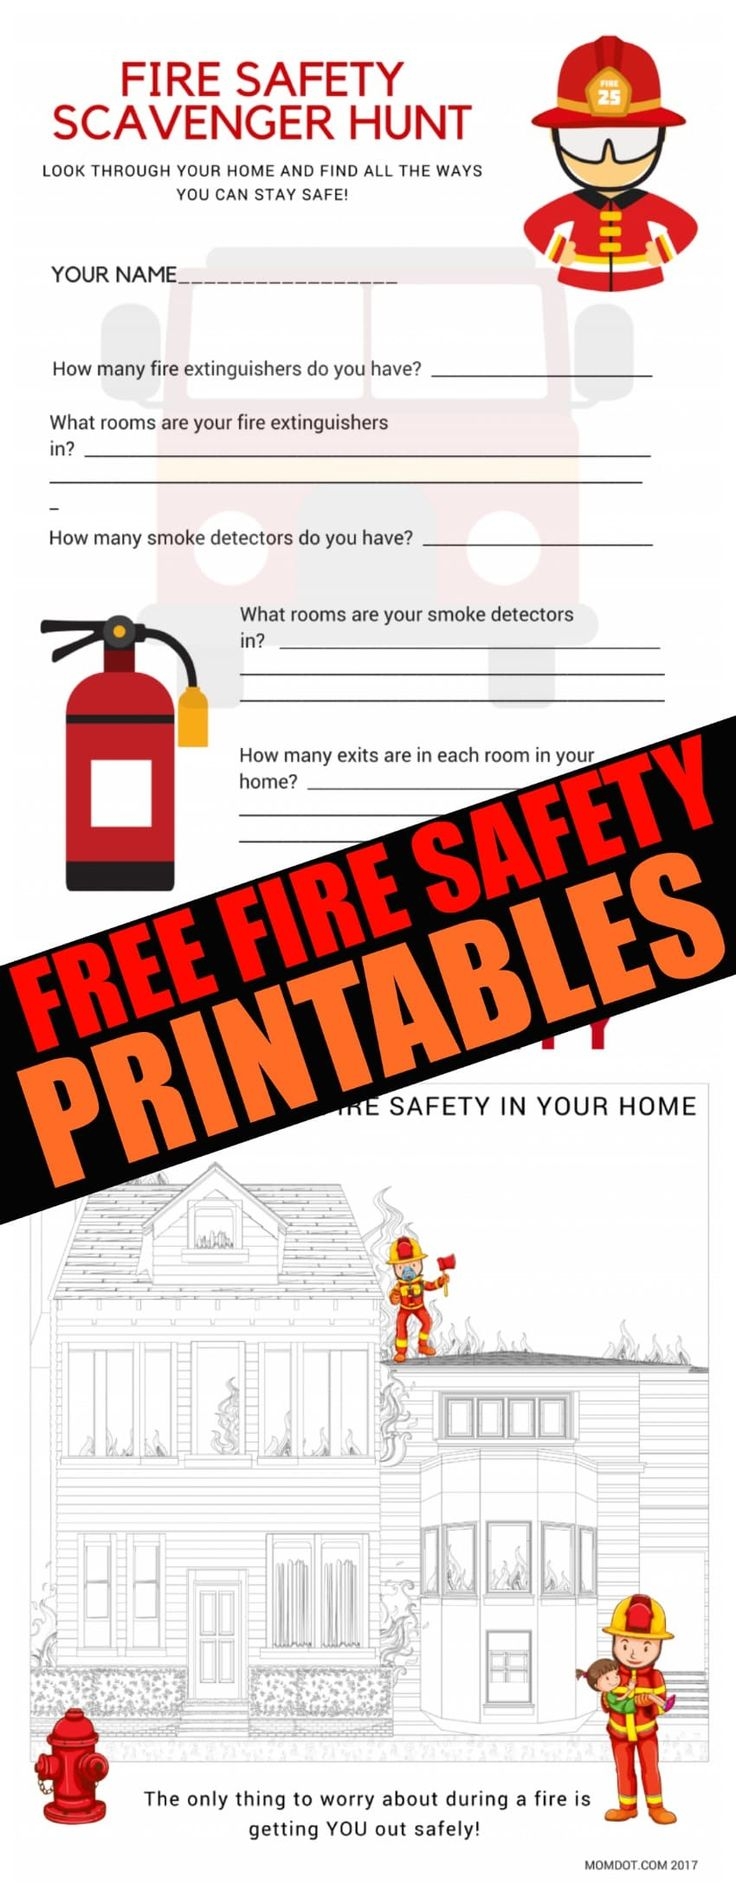 Fire Safety Scavenger Hunt Free Printable Download For Kids Momdot Fire Safety For Kids Free Fire Safety Printables Fire Safety Free